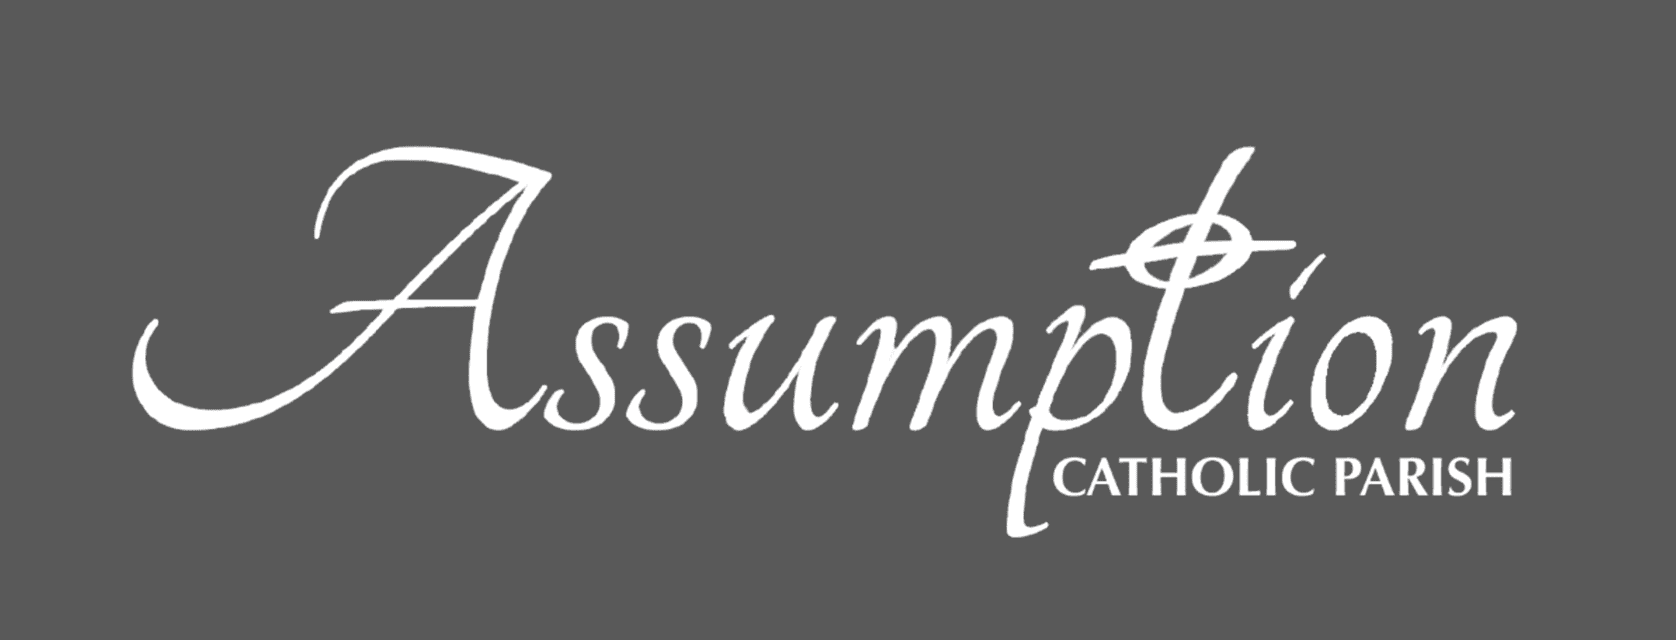 Assumption Catholic Parish